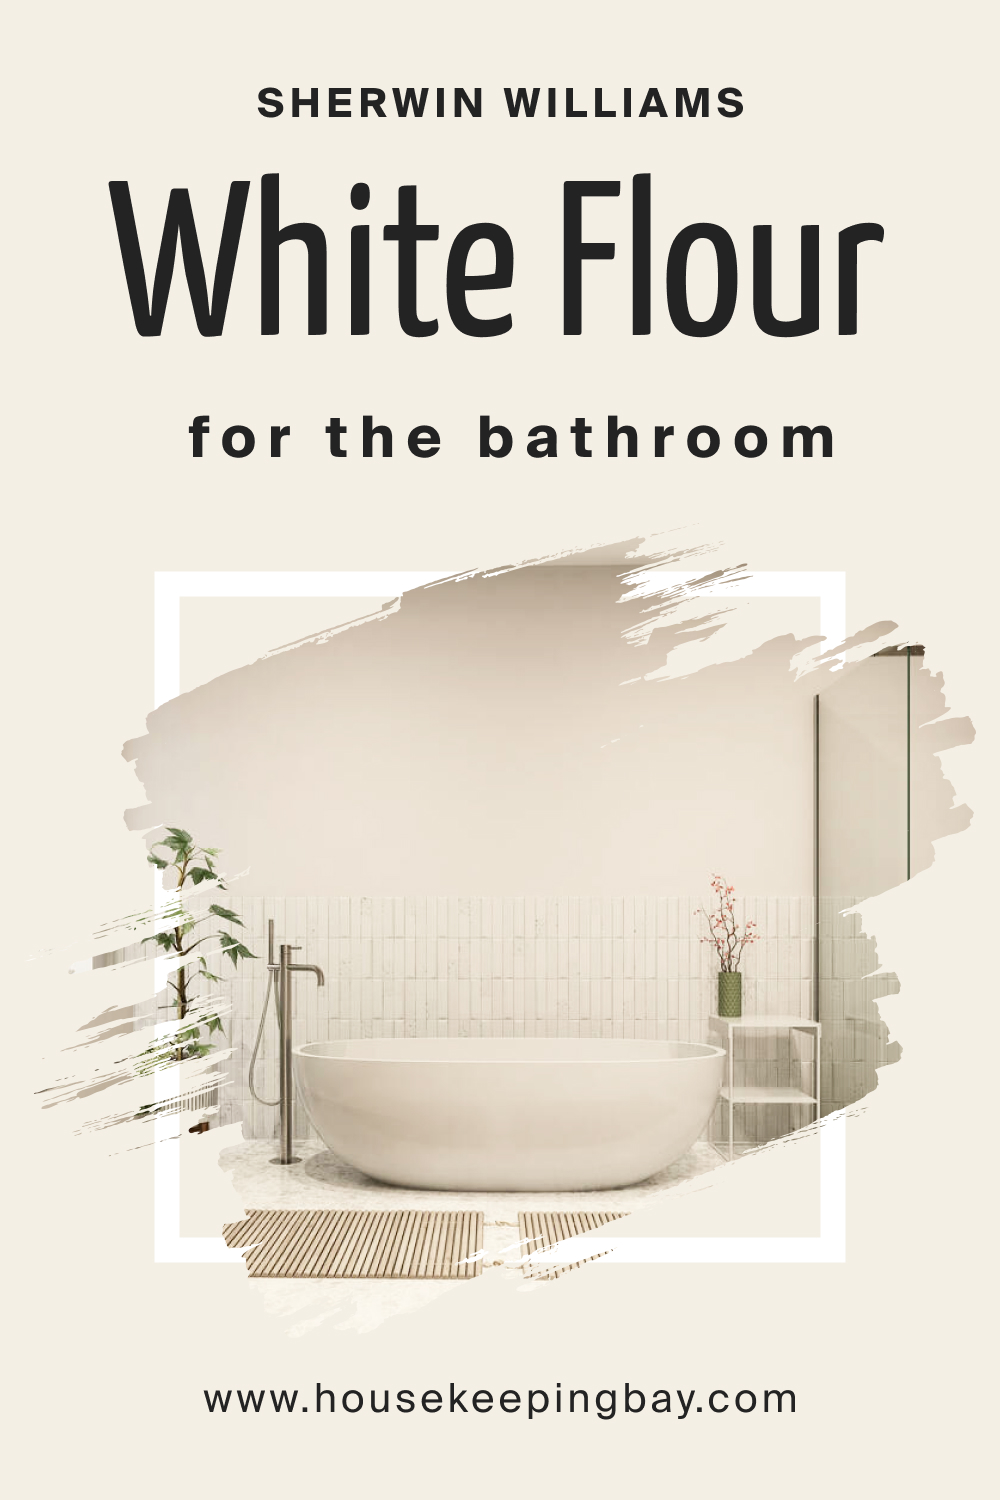 Sherwin Williams. SW White Flour in the Bathroom